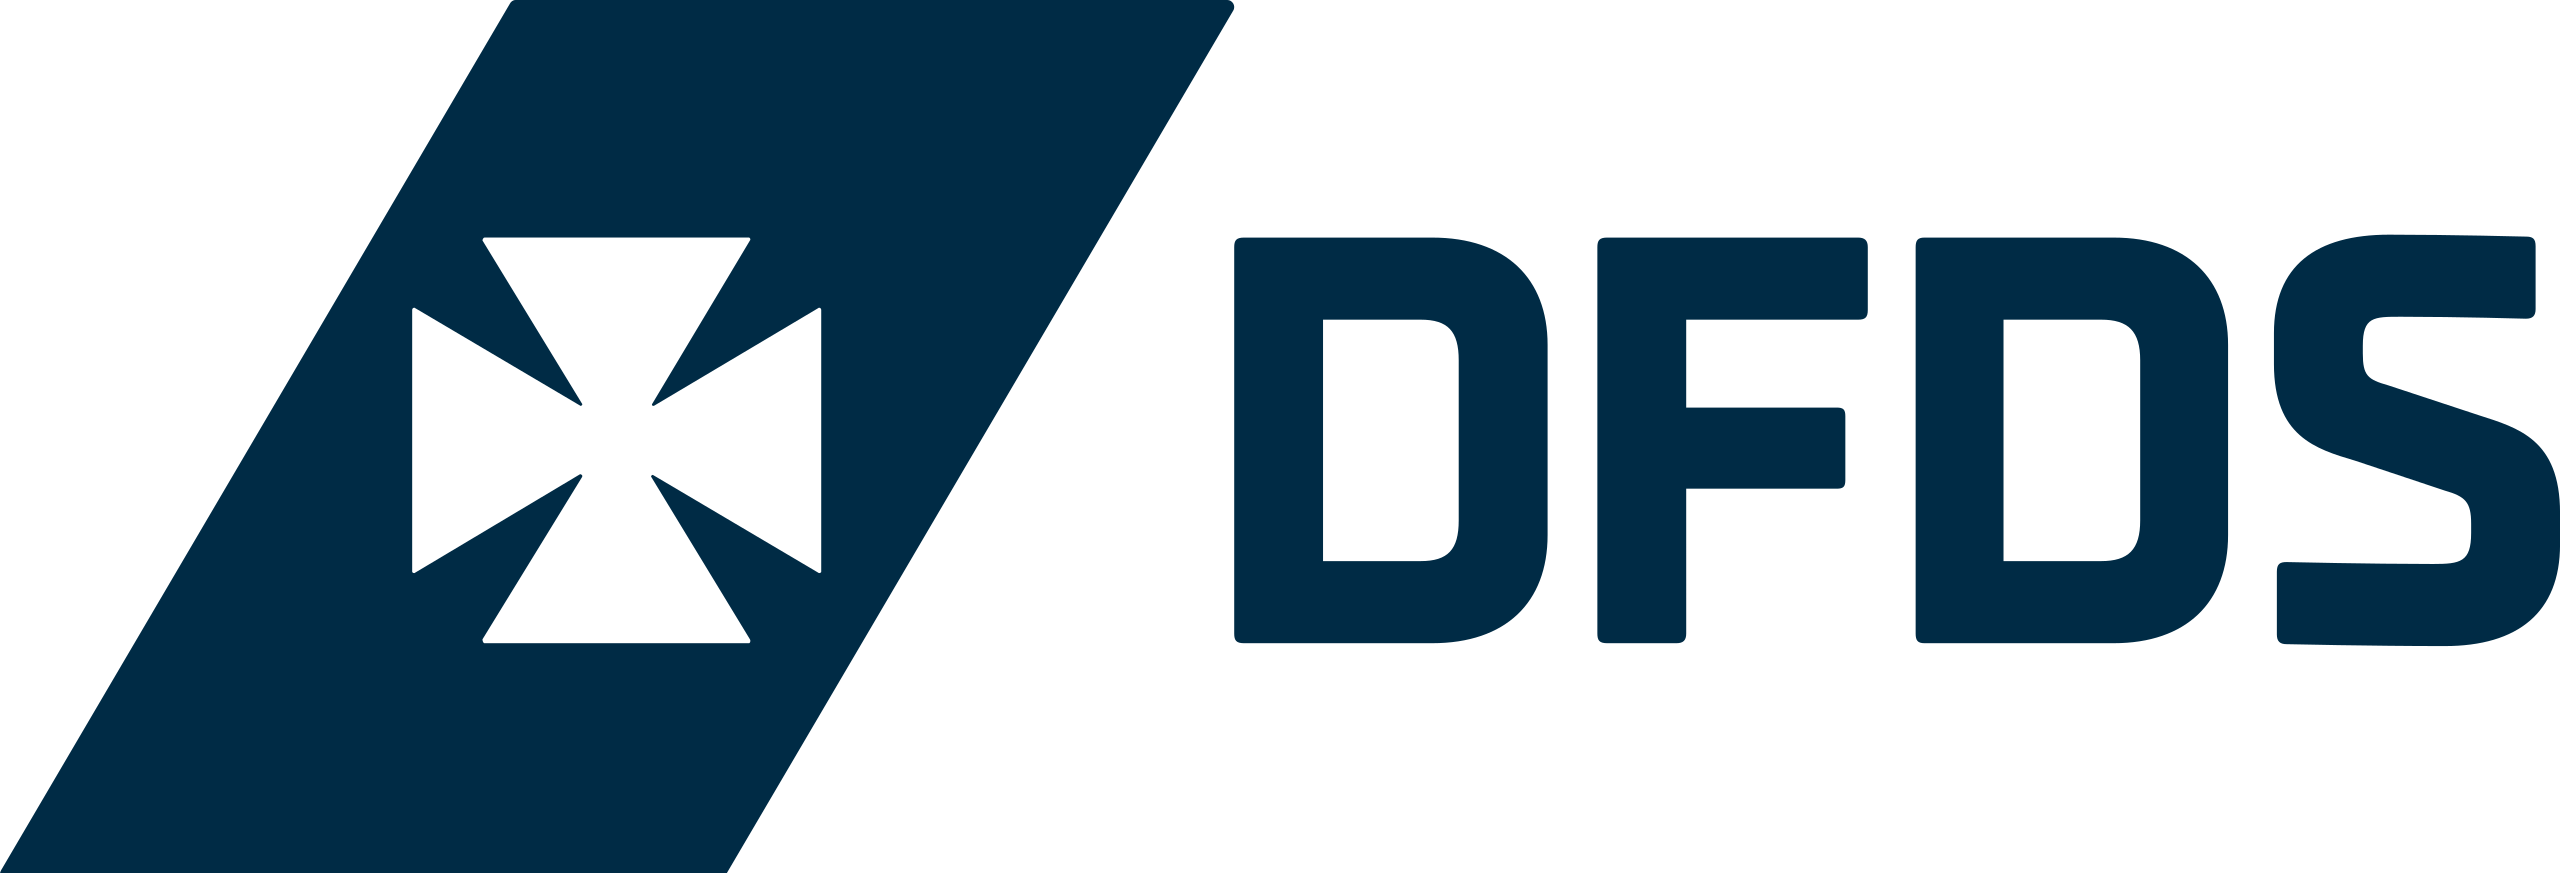 Accueil | Smartferry | DFDS logo